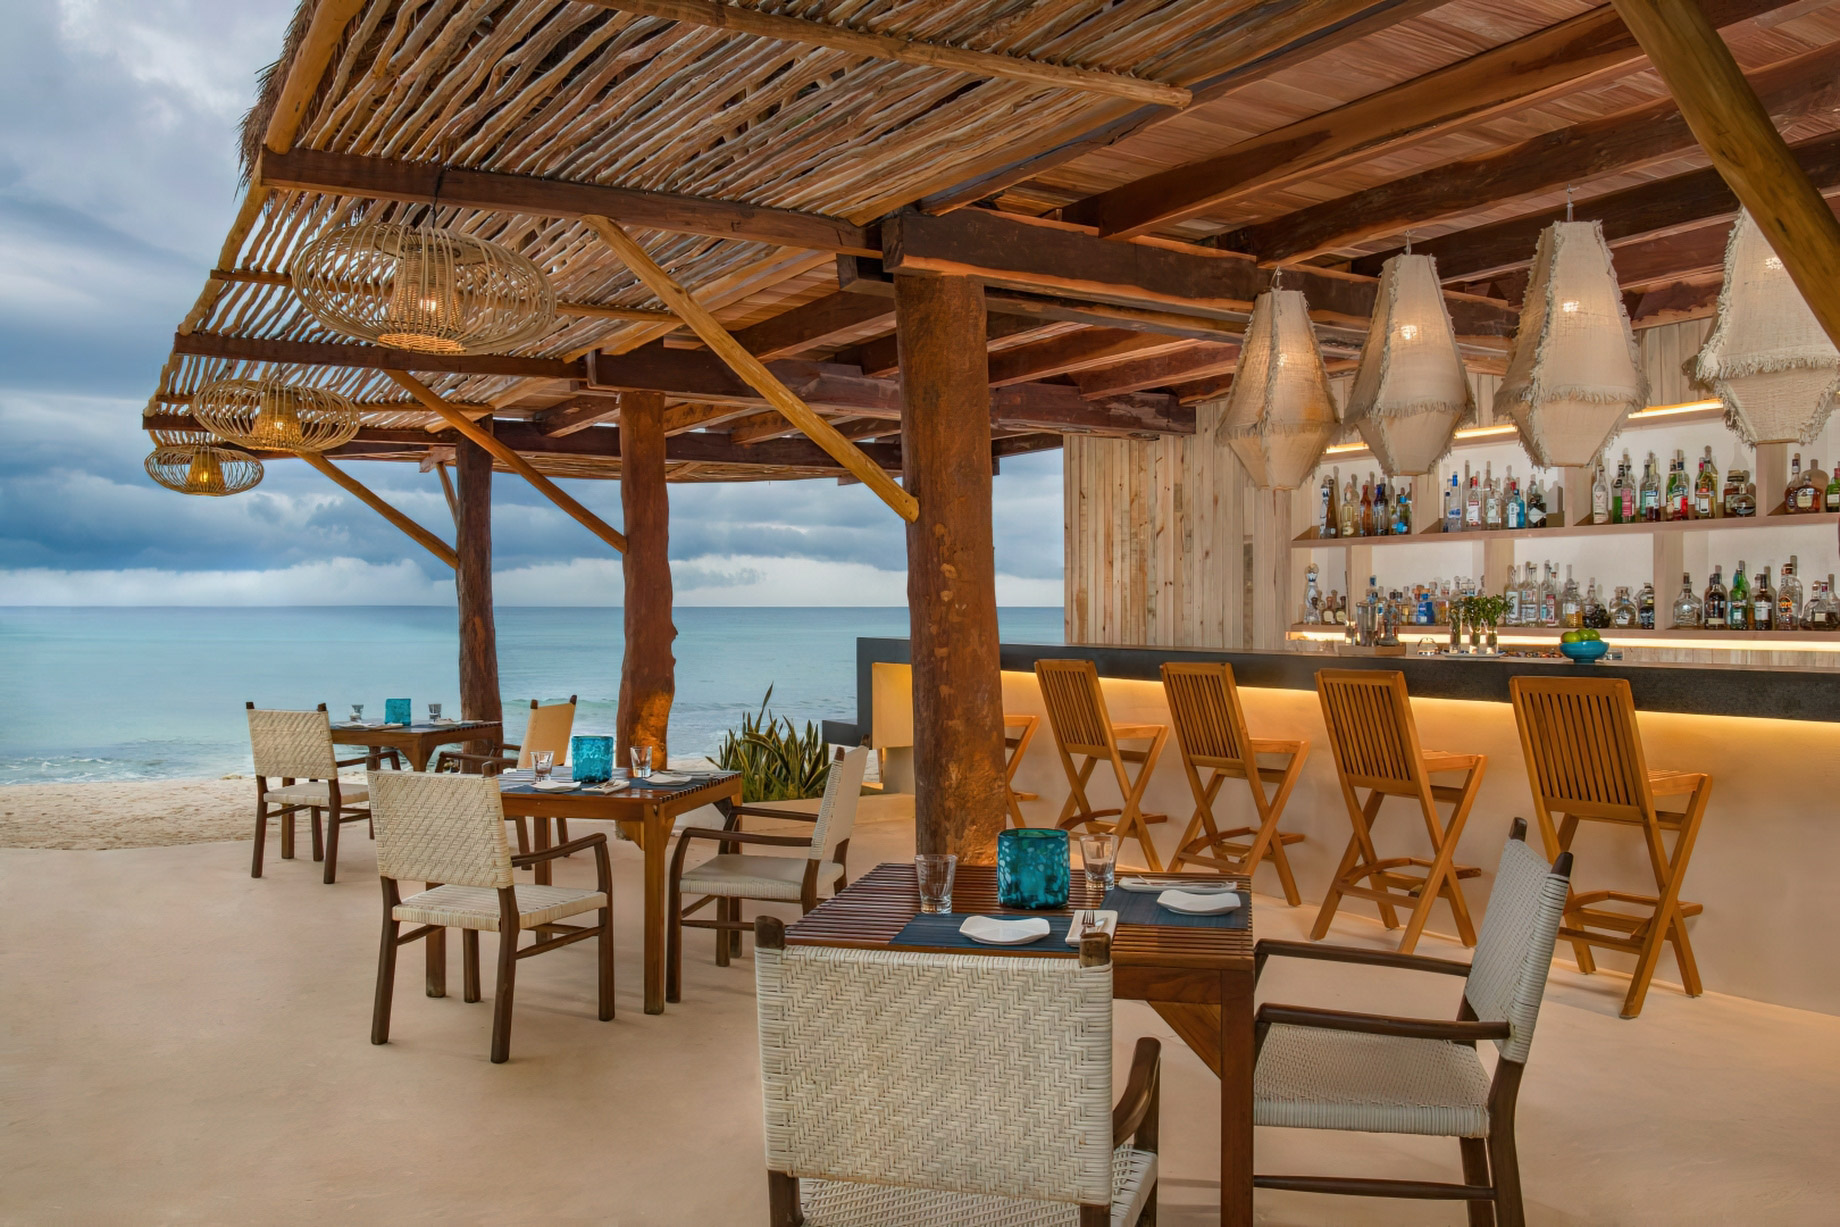 Viceroy Riviera Maya Resort - Playa del Carmen, Mexico - Coral Restaurant + Bar